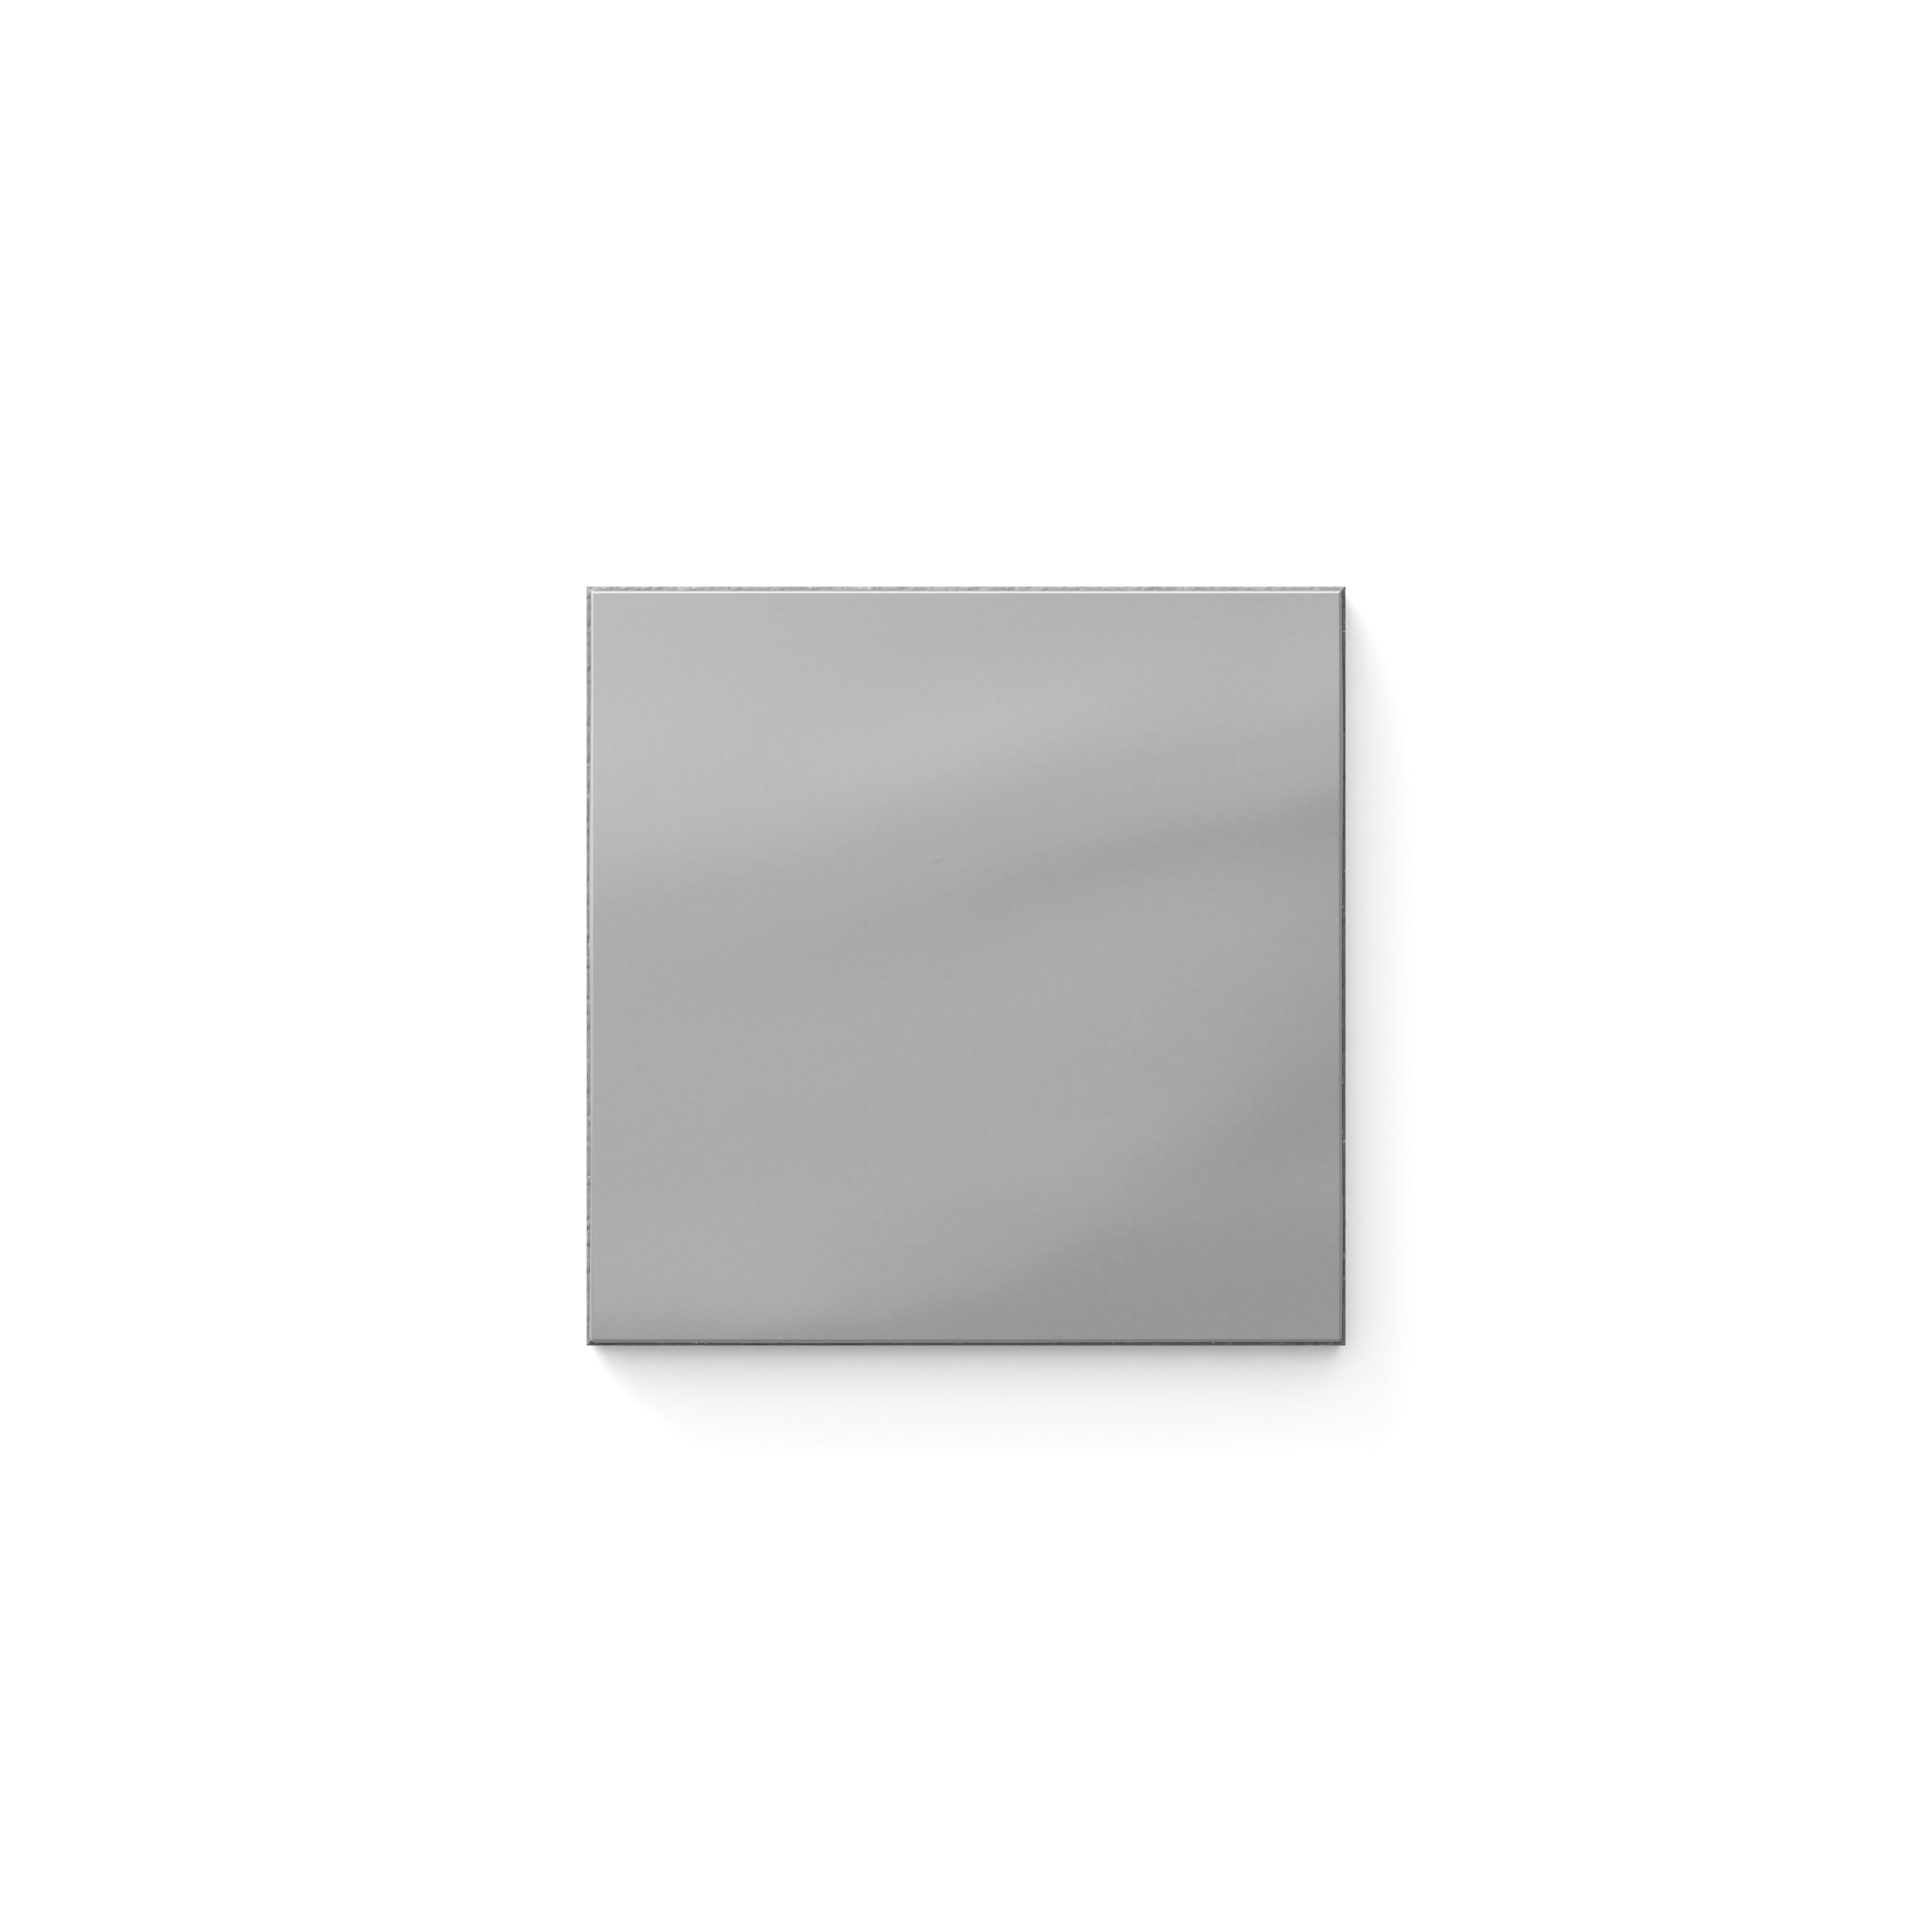 Palmer Glossy Grey 4x4 Tile Sample